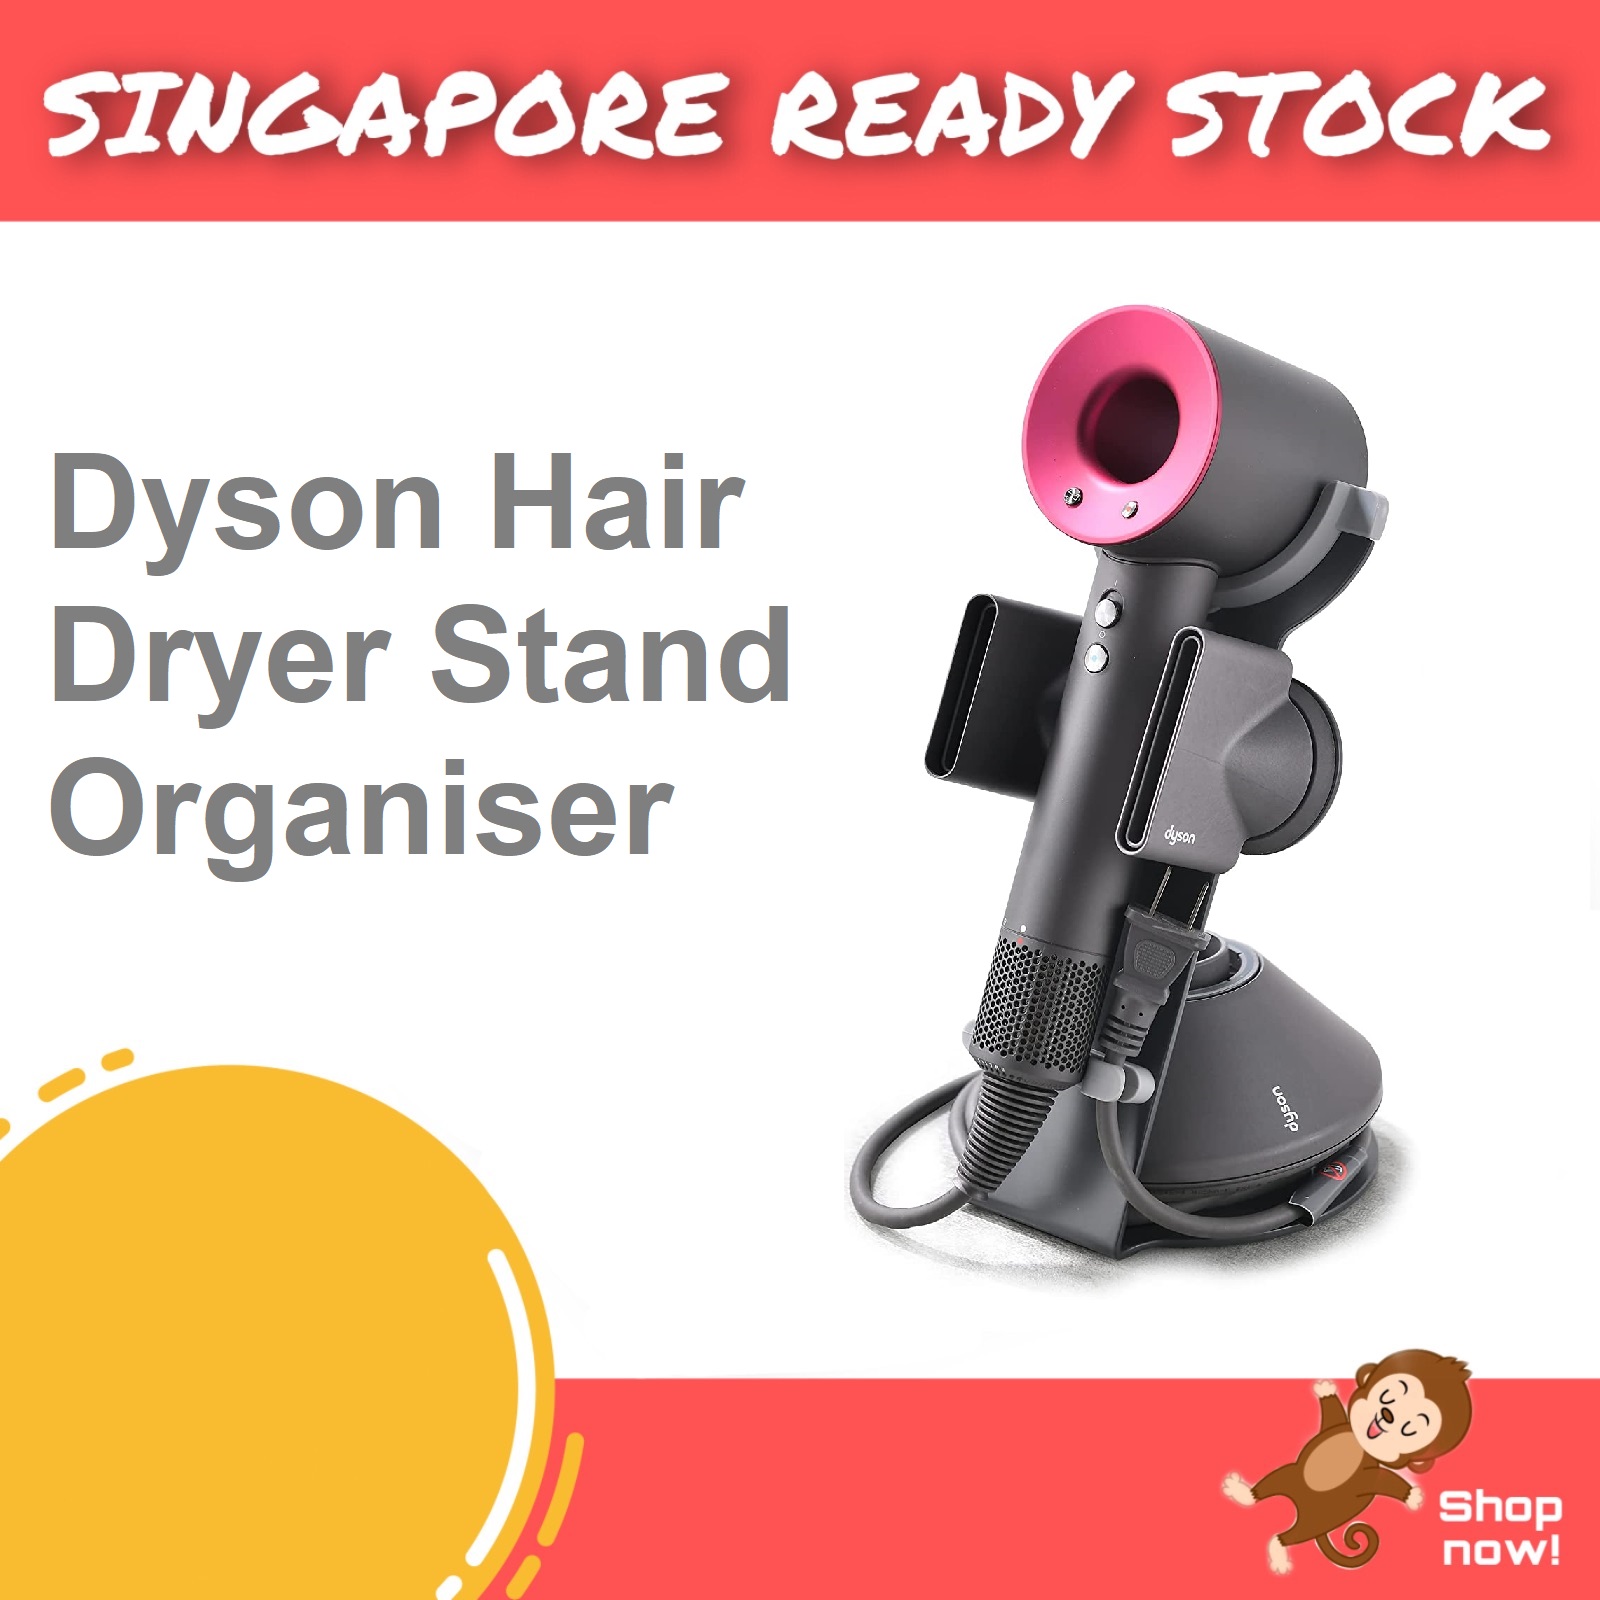 Hair Dryer Stand Steel Holder Rack Dyson Storage Organizer Singapore Ready  Stocks | Lazada Singapore